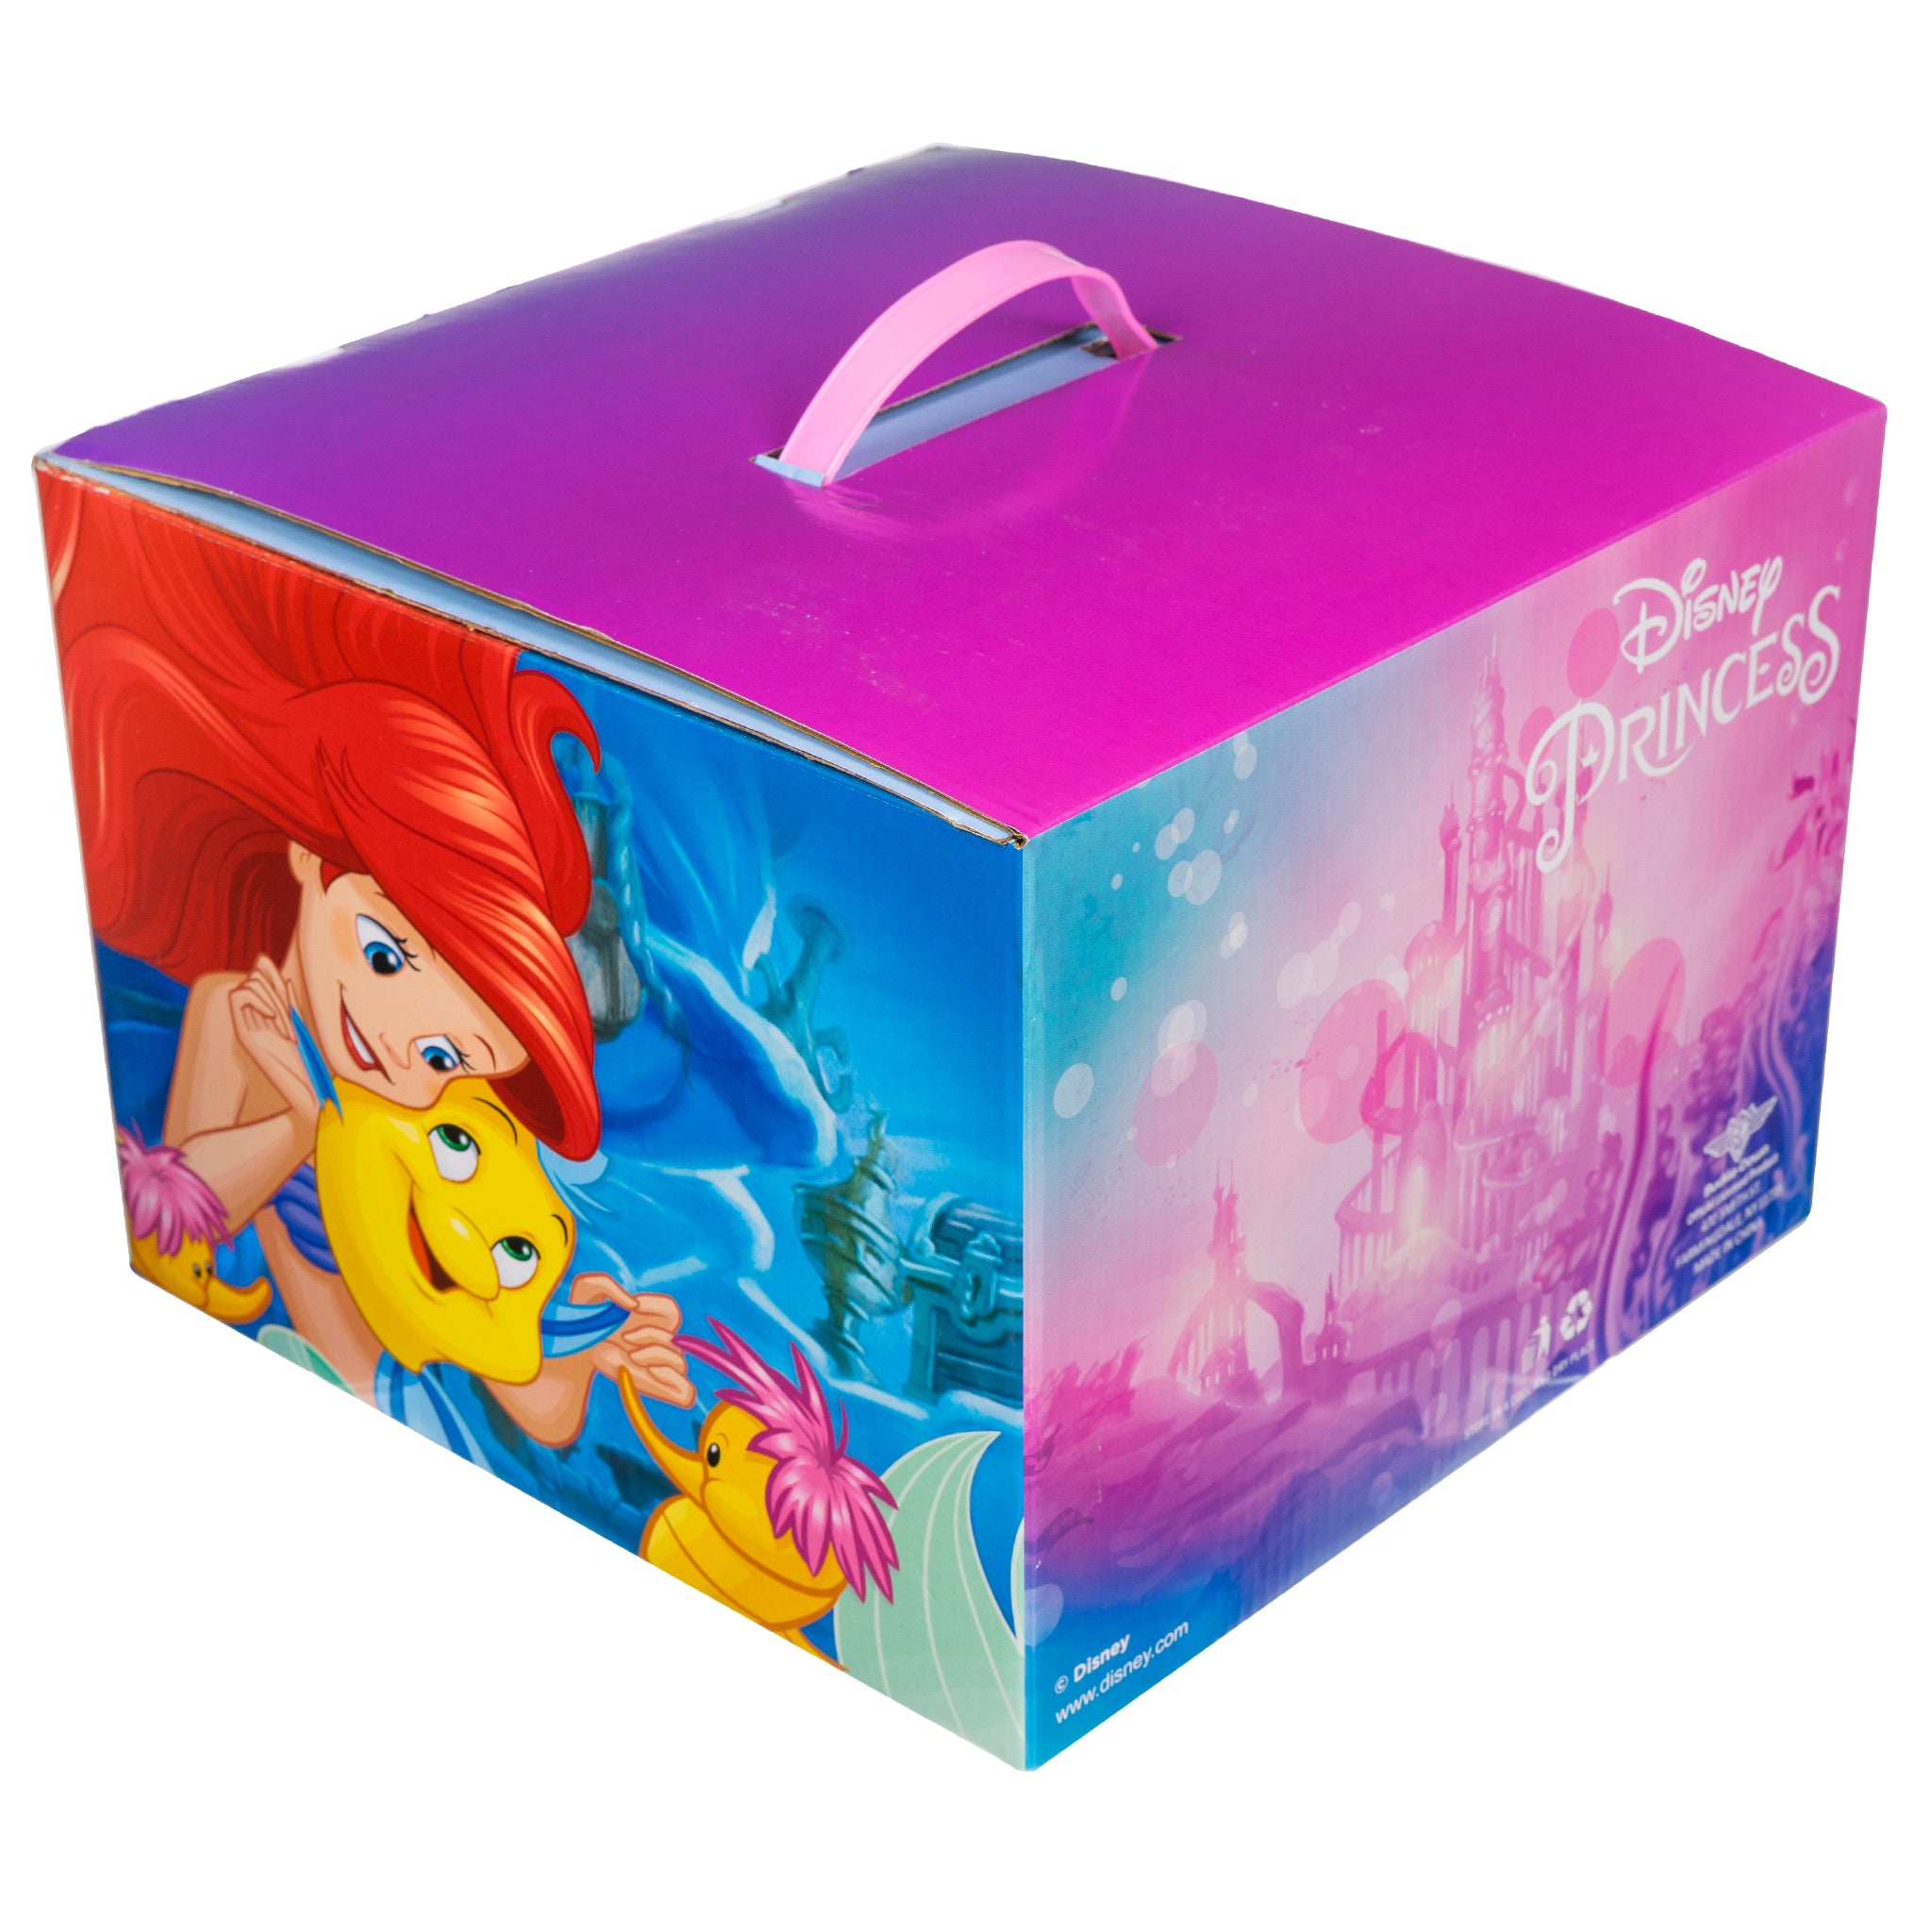 Disney Princess Ariel Box